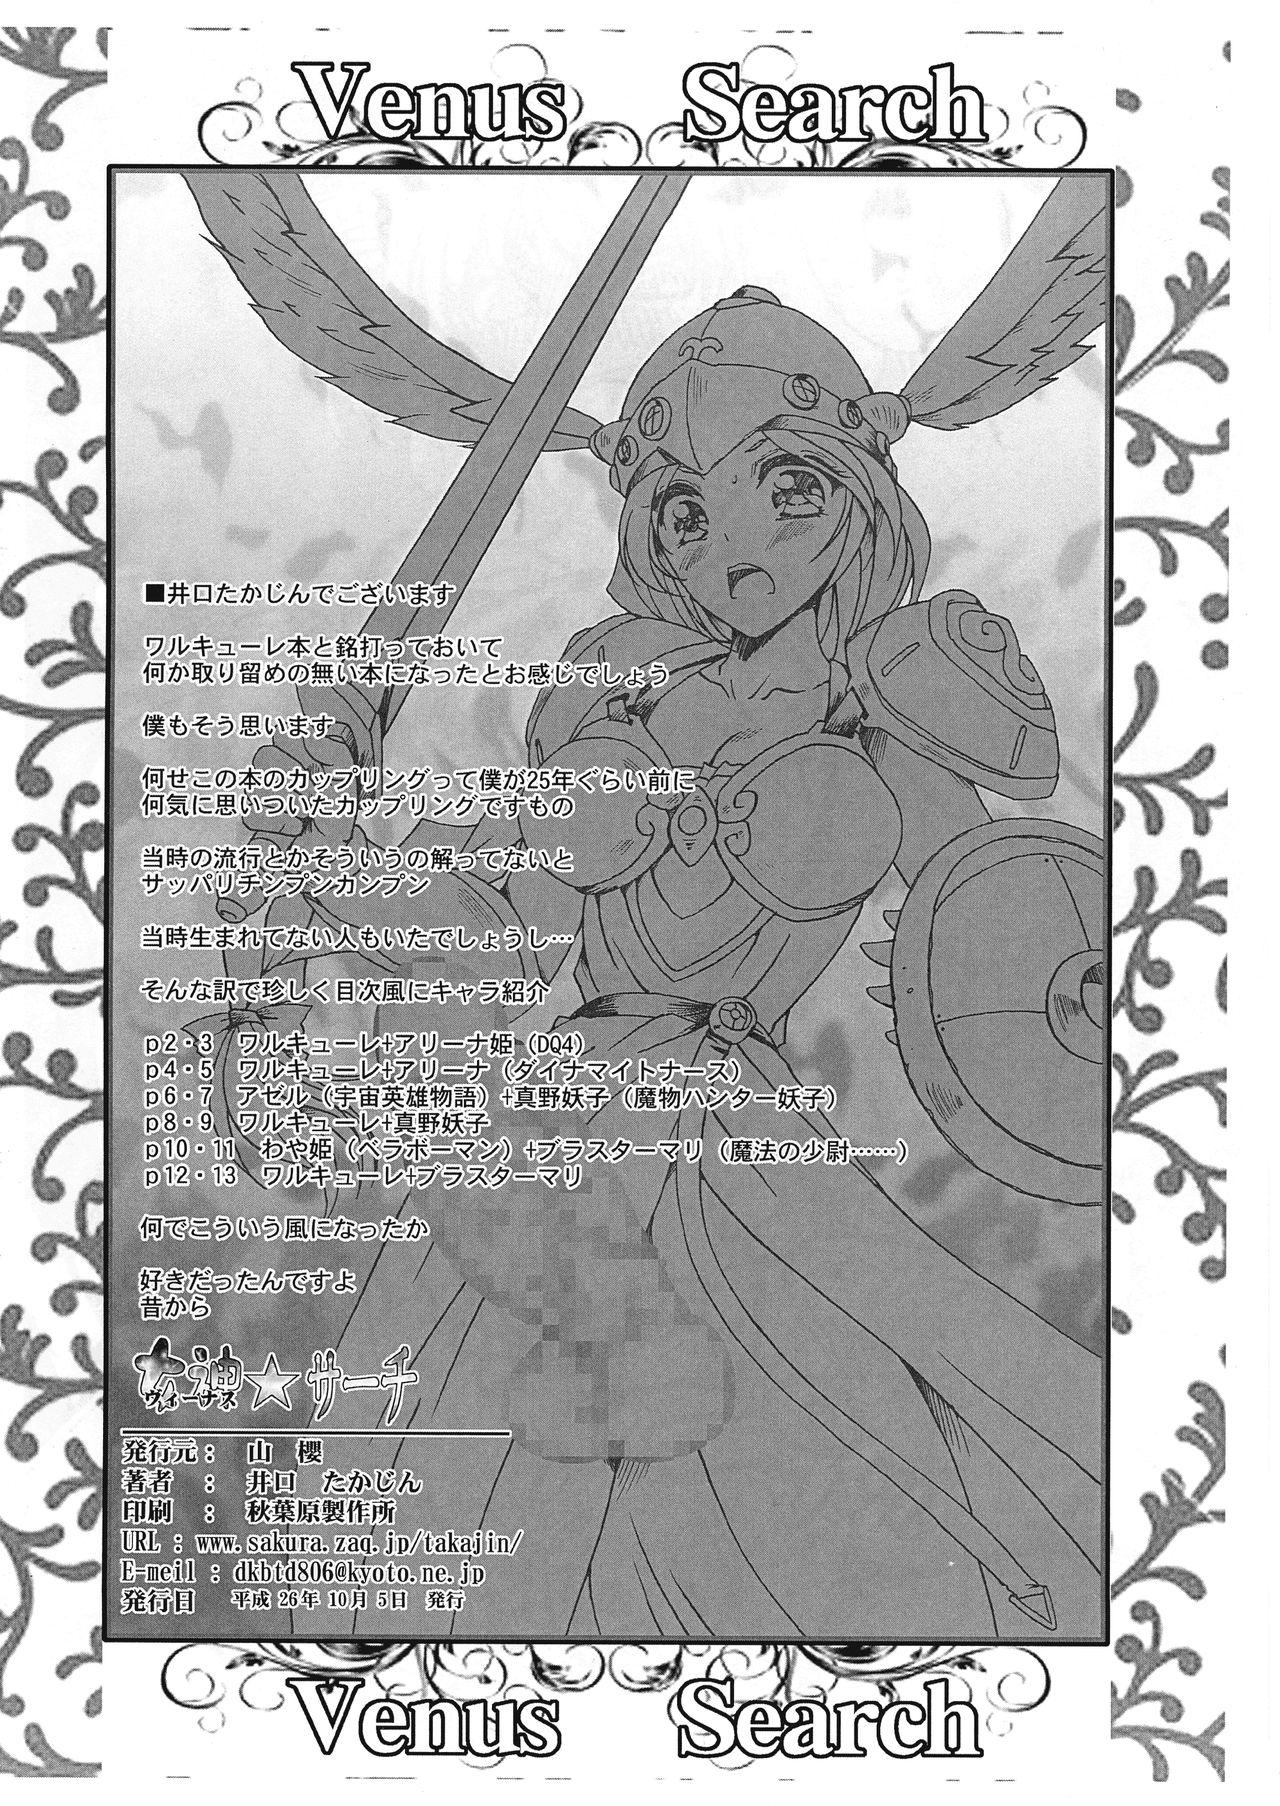 Hole Megami ☆Search Venus Search Banheiro - Page 2